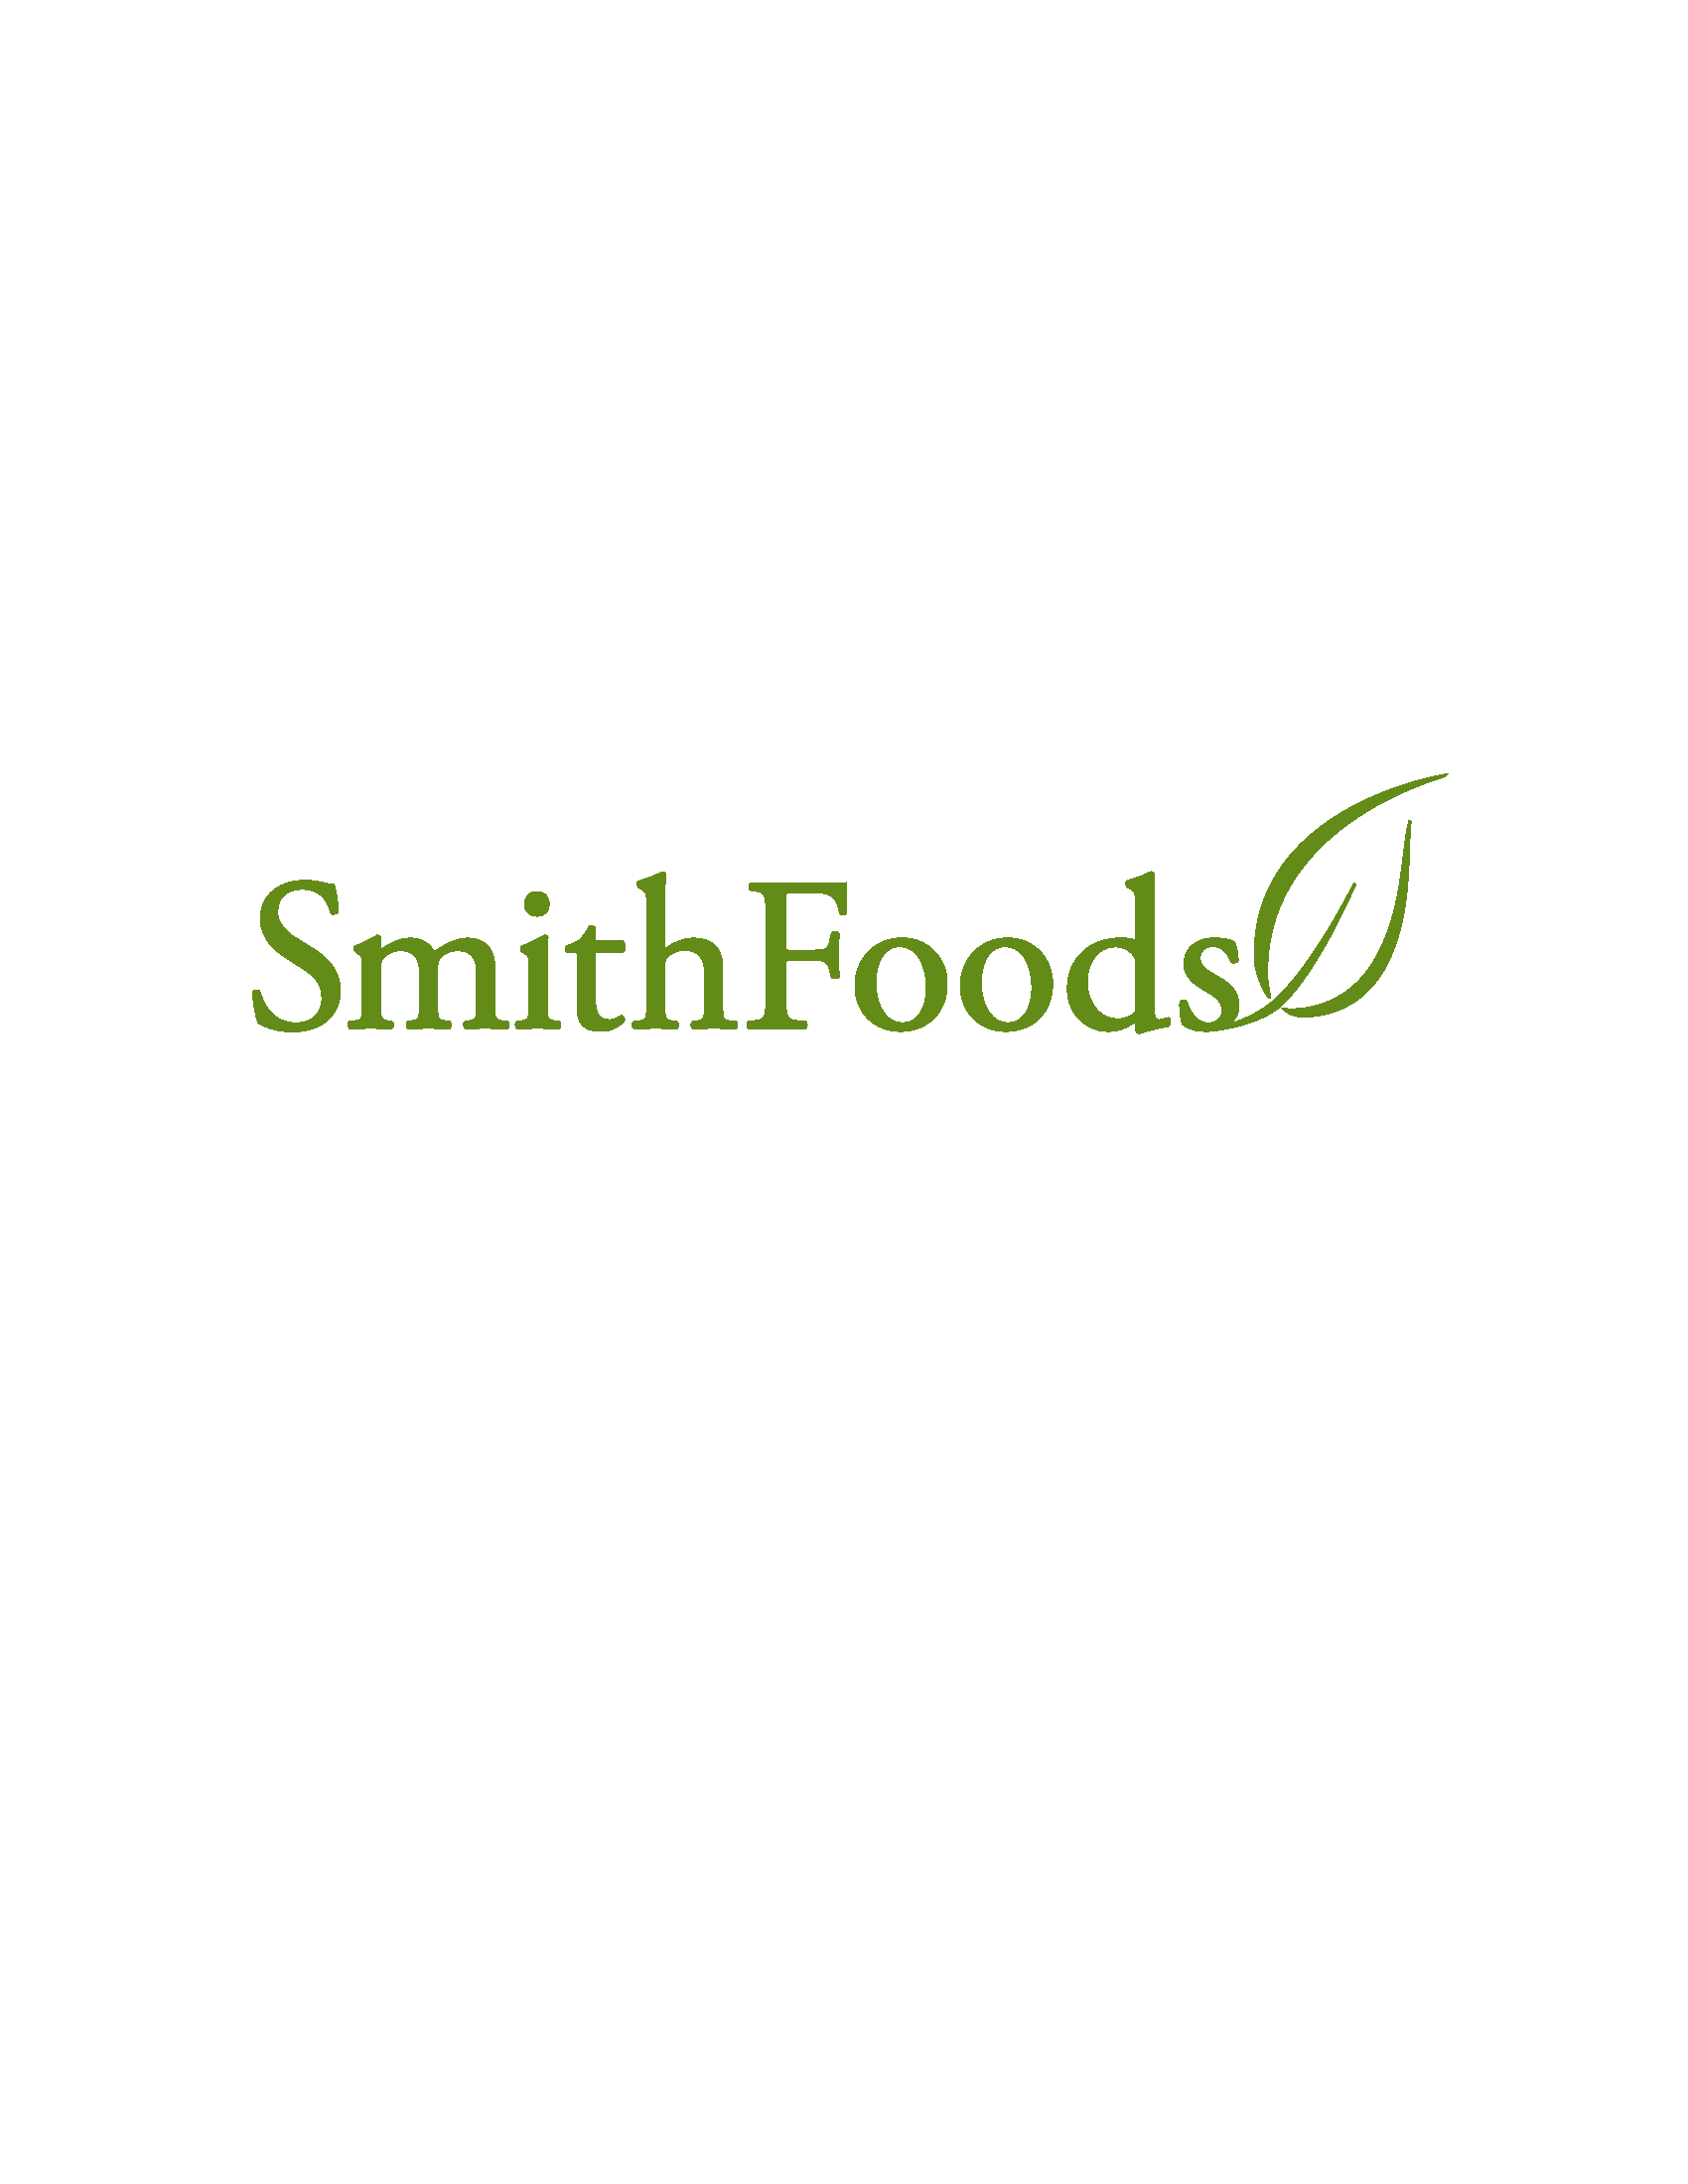 SmithFoods, Inc. logo